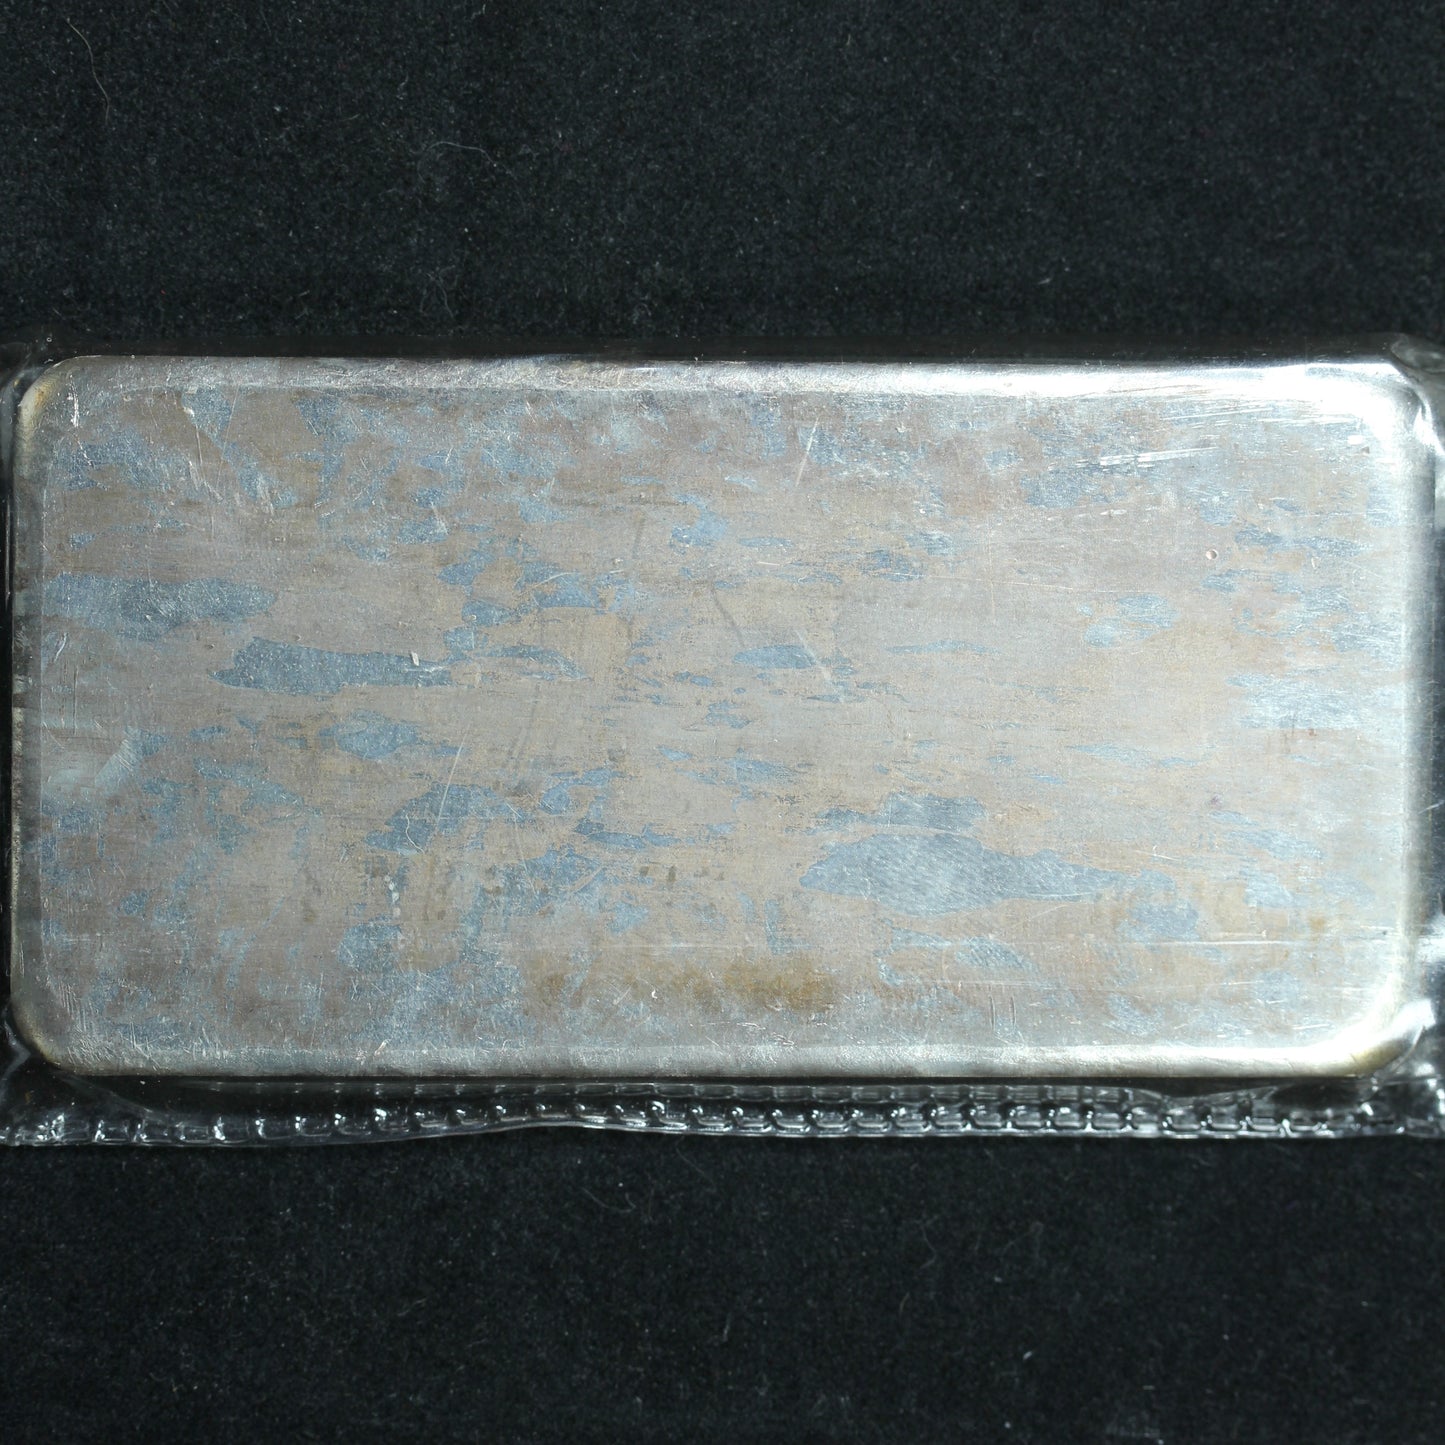 10 oz .999+ Fine Silver National Refiners-Assayers Silver Bar Ingot - #022376